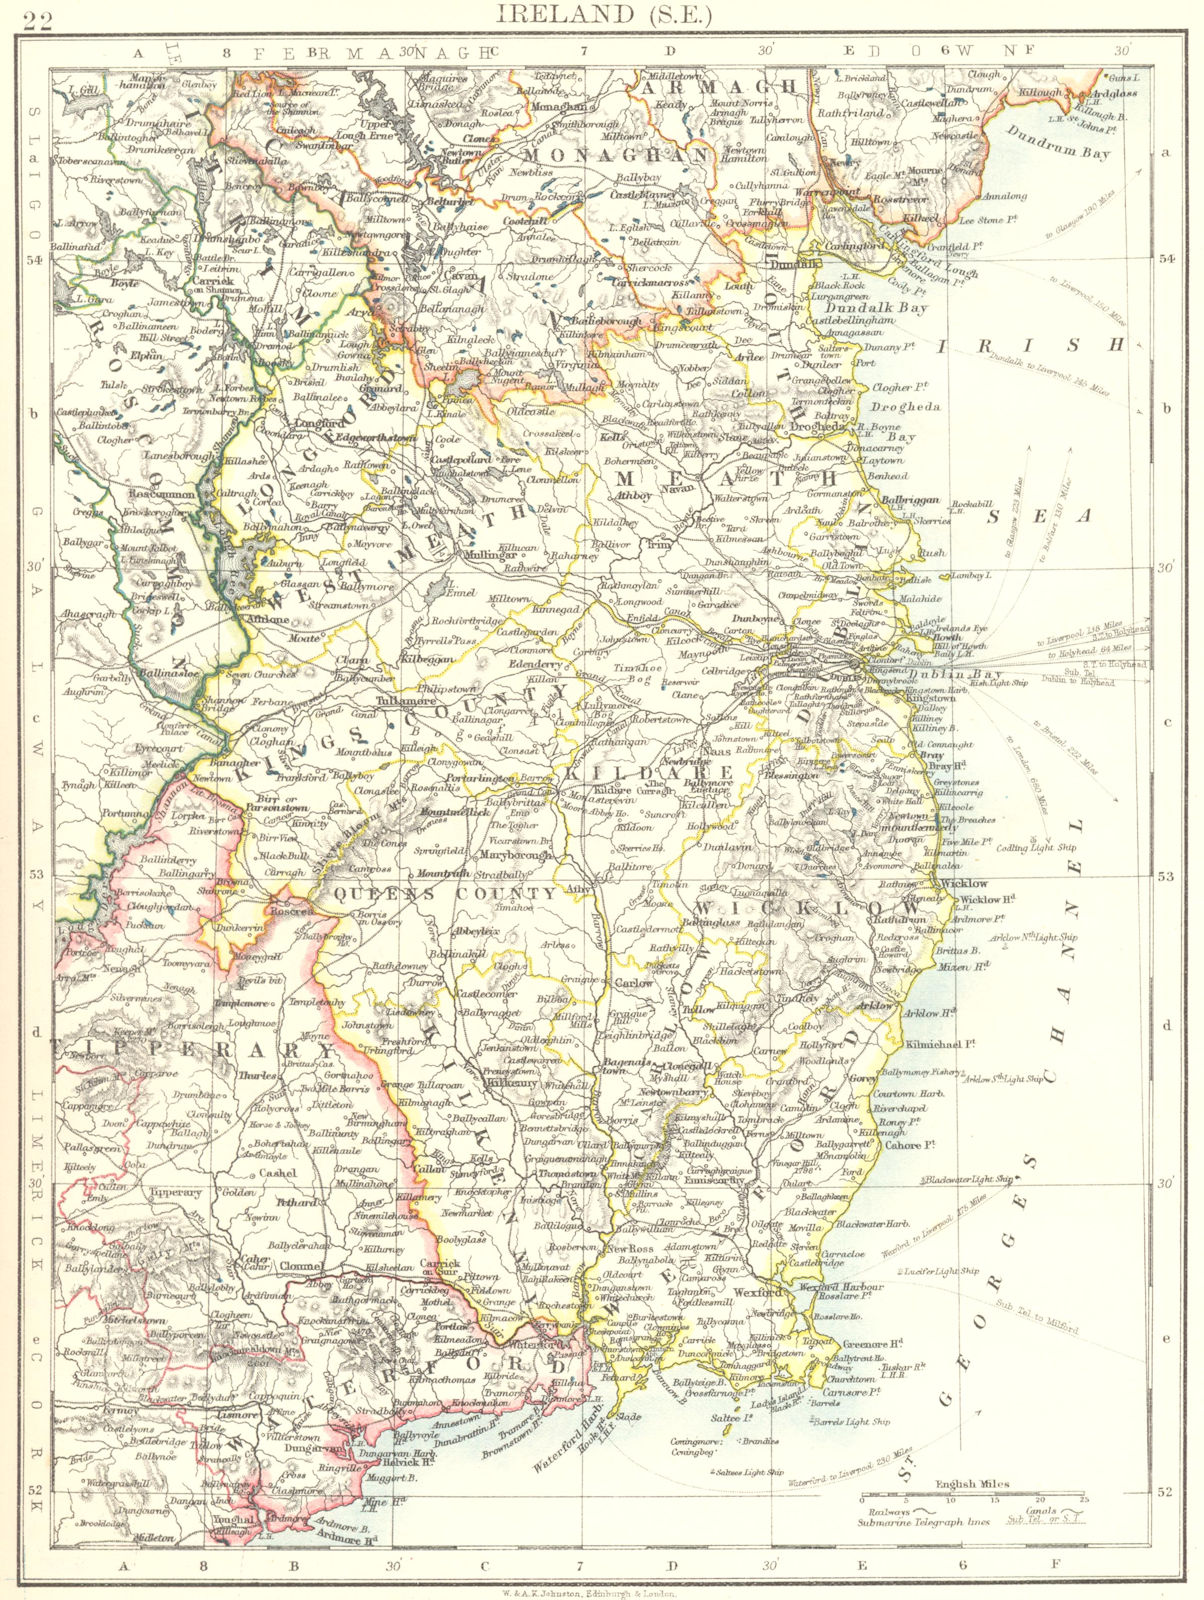 LEINSTER. Meath Dublin Longford Wexford Wicklow.  SE Ireland. JOHNSTON 1899 map